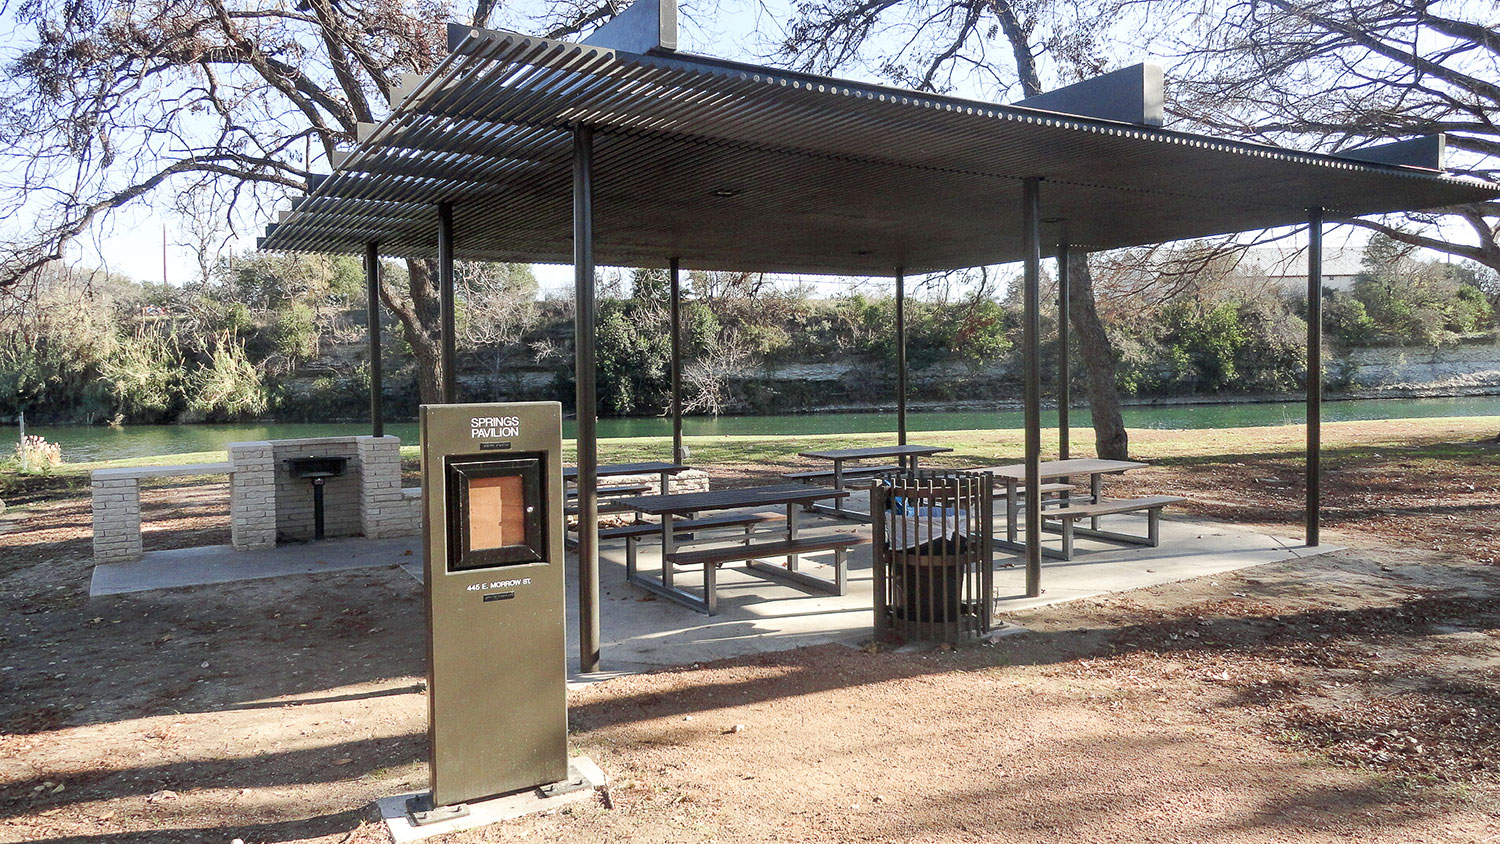 Springs Pavilion in San Gabriel Park